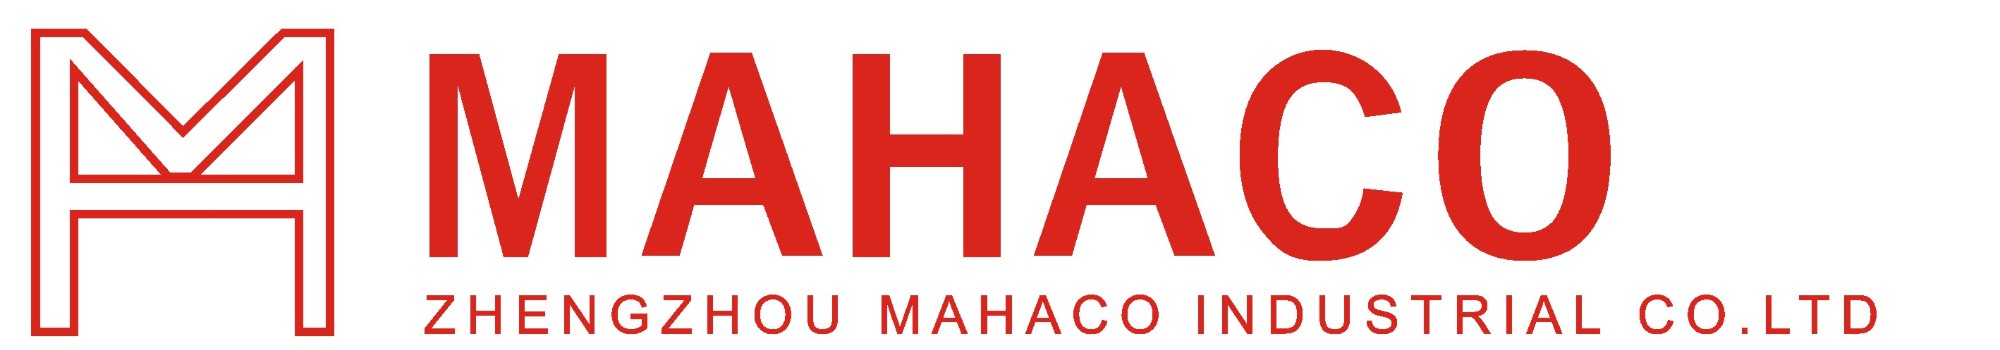 Zhengzhou Mahaco Industrial Co., Ltd (MHC)